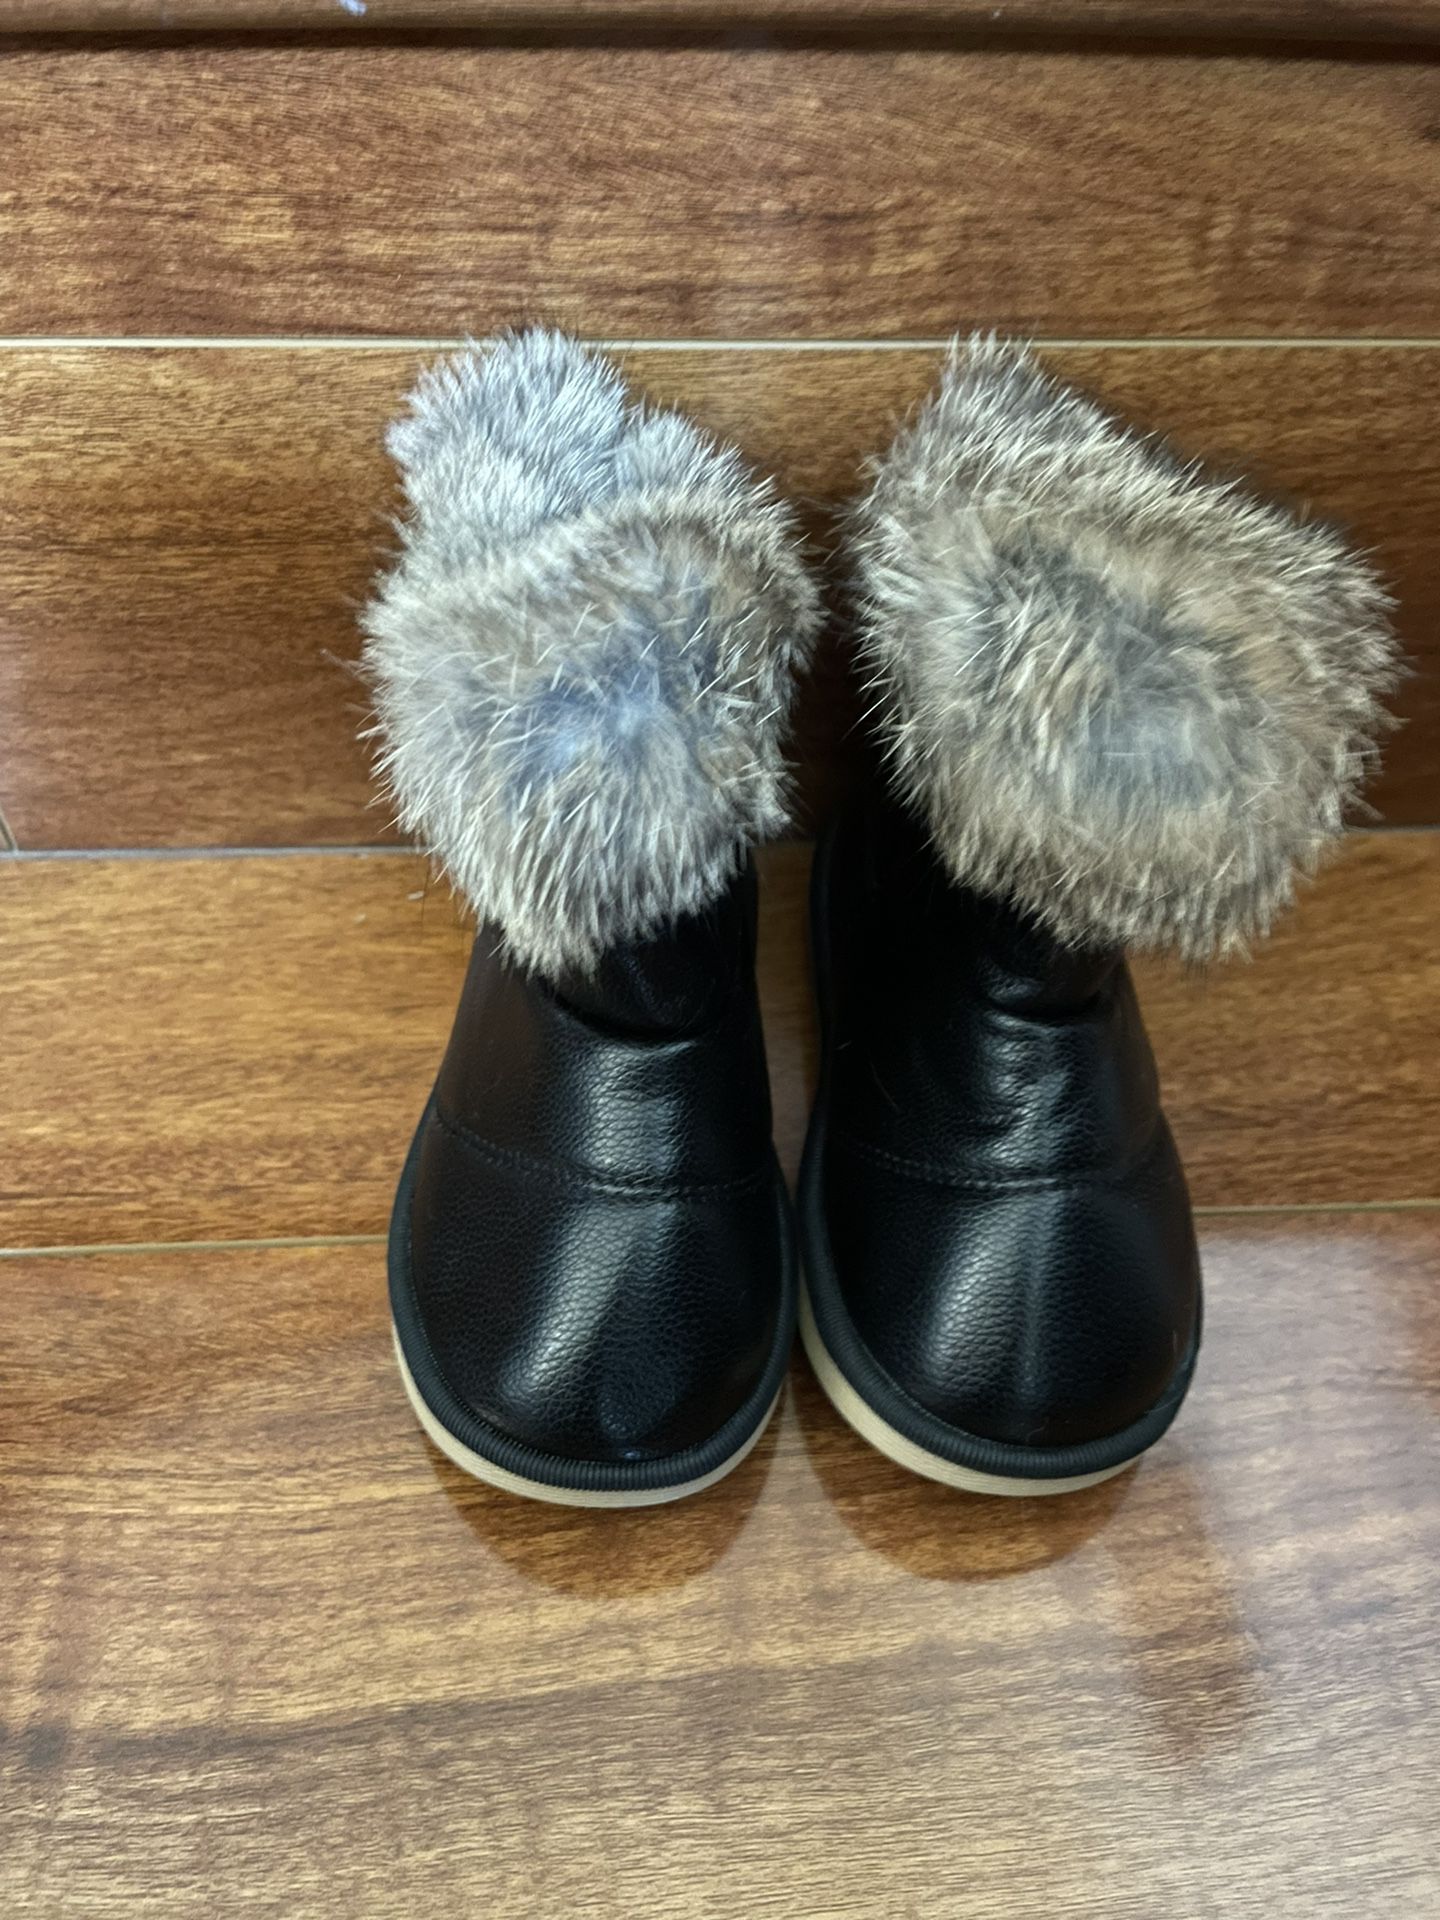 Toddler Winter Snow Boots Warm Flat Plush Shoes - Black